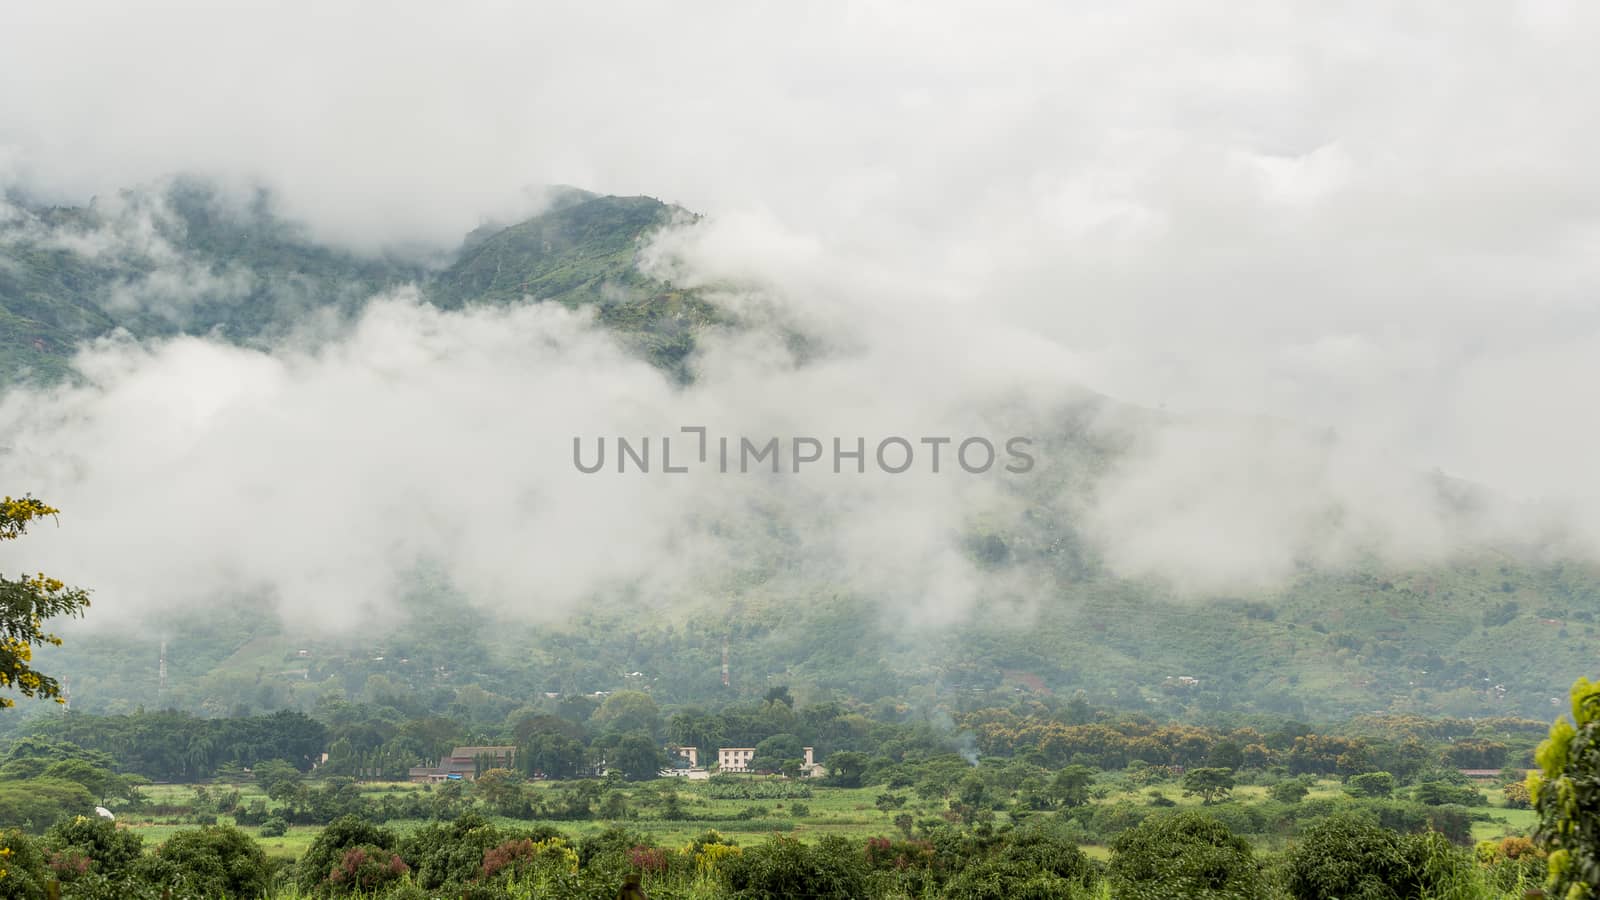 Uluguru Mountains in the Eastern Region of Tanzania by derejeb